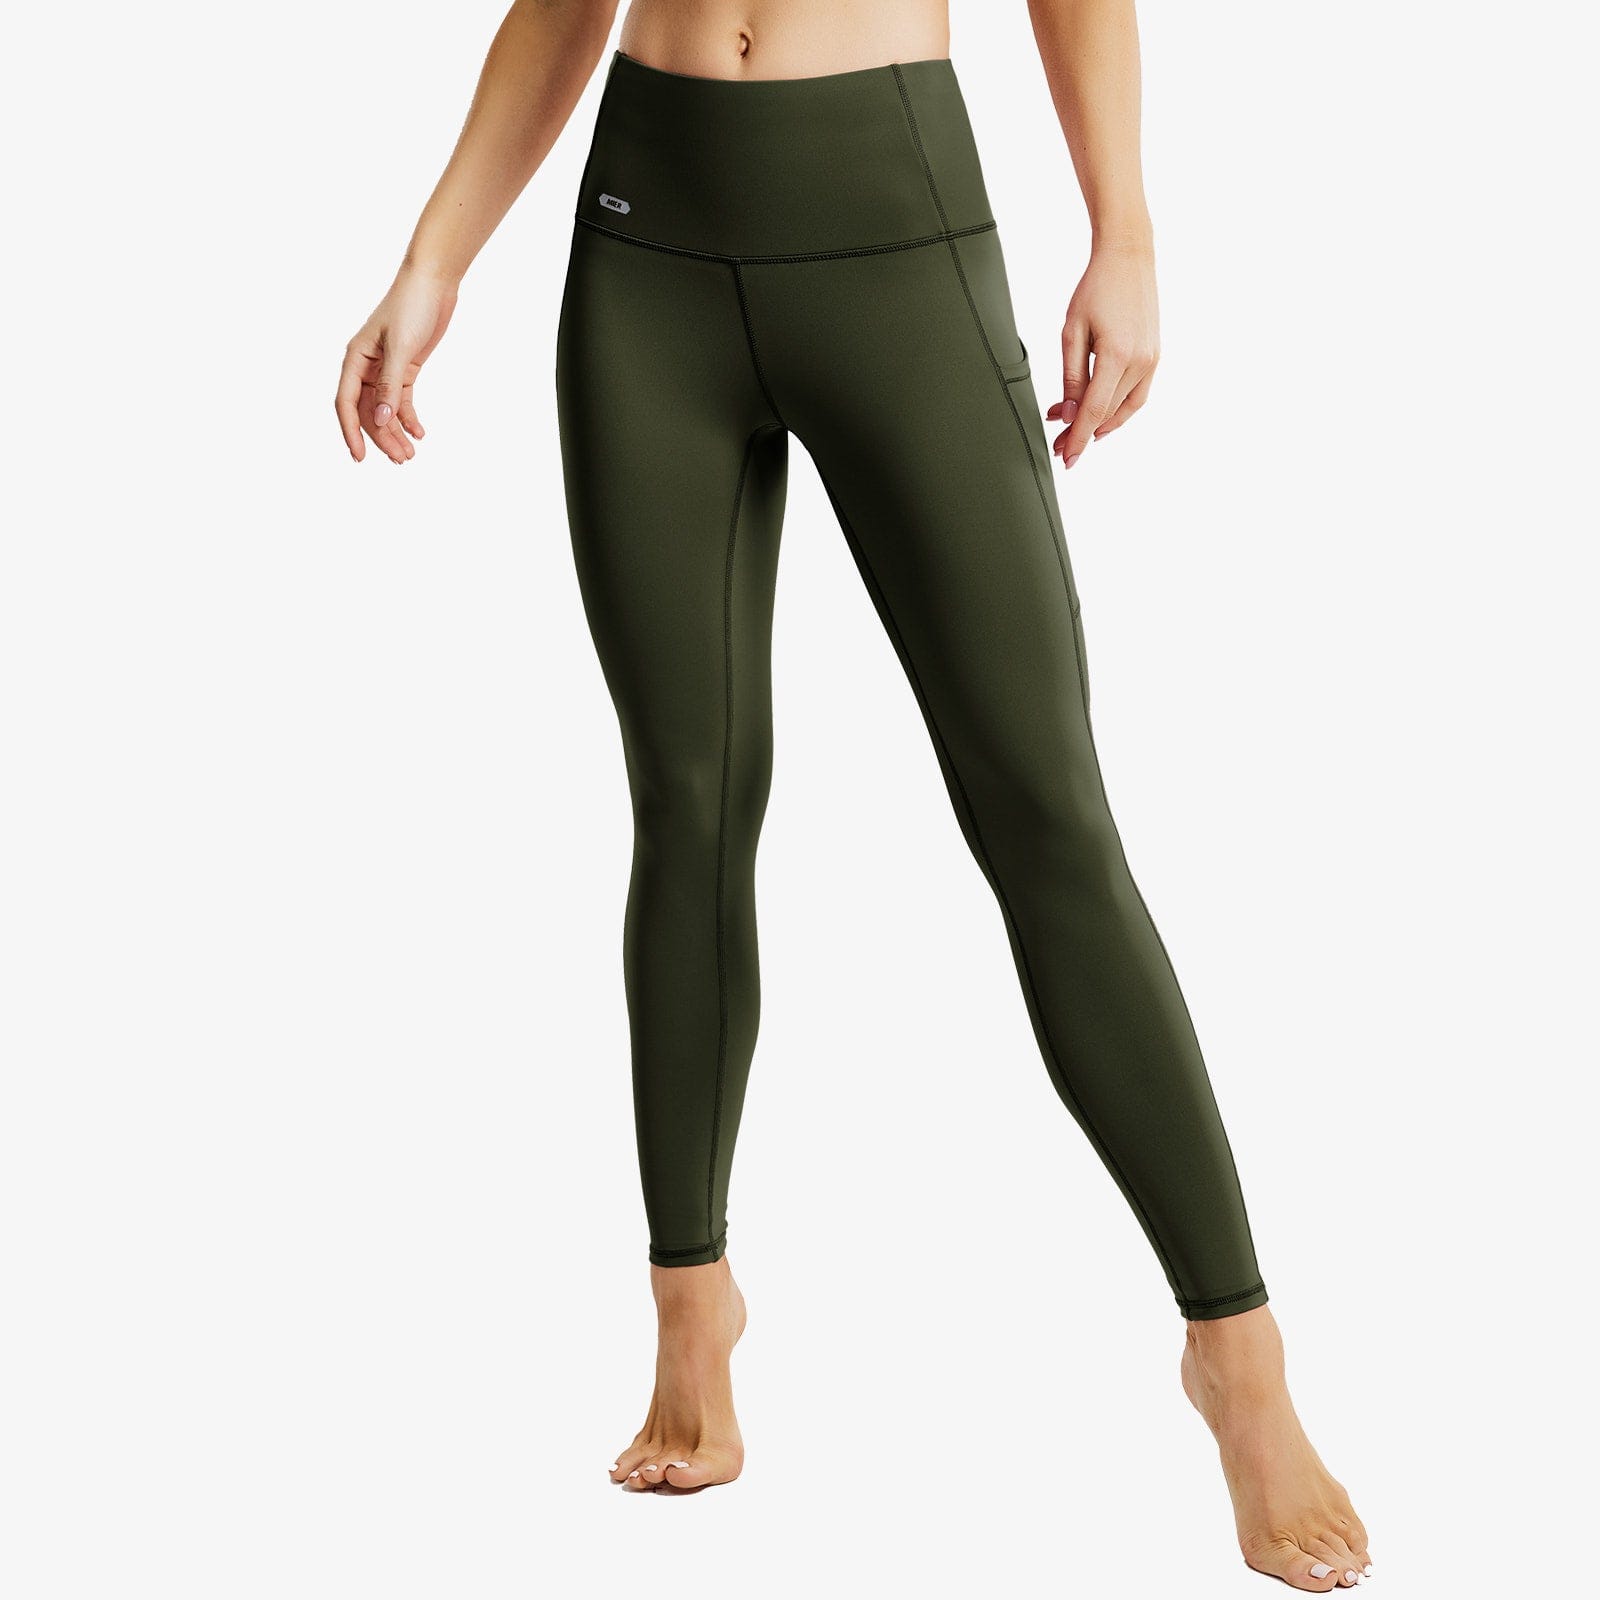 Women's High Waist Yoga Pants with Pockets, Full Length - Deep Green / S